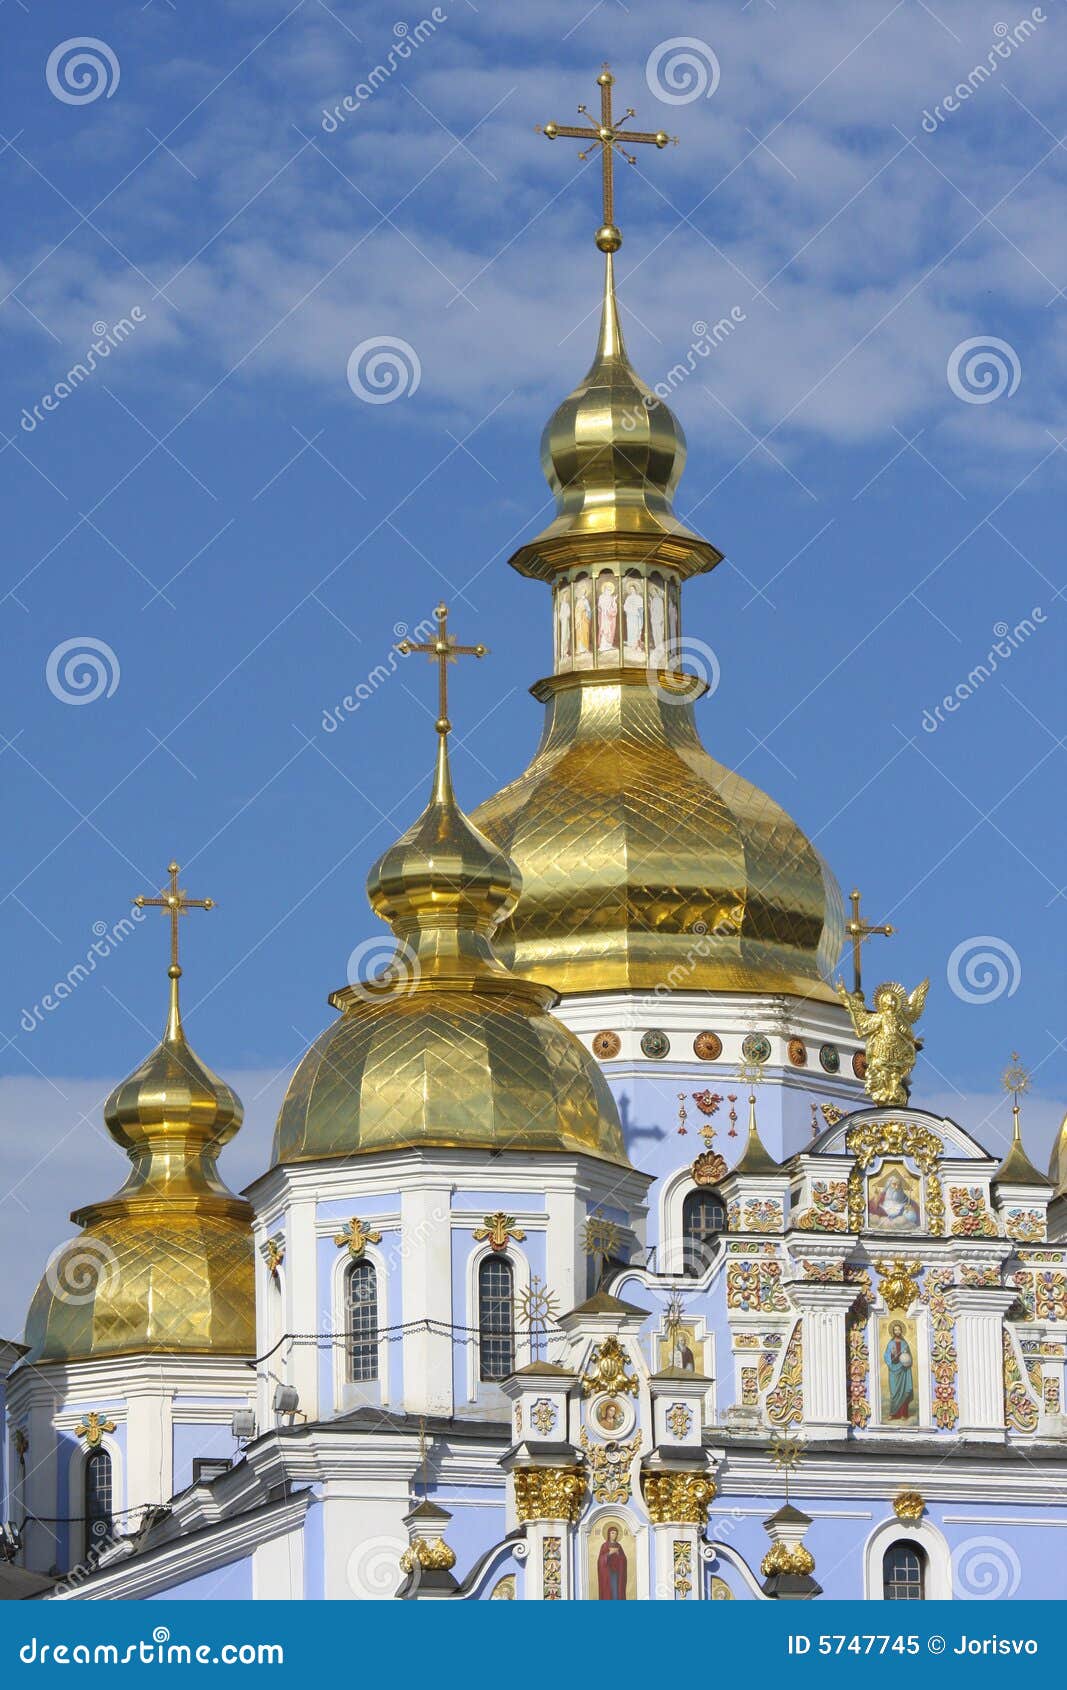 golden towers of orthodox church in kiev, ukraine